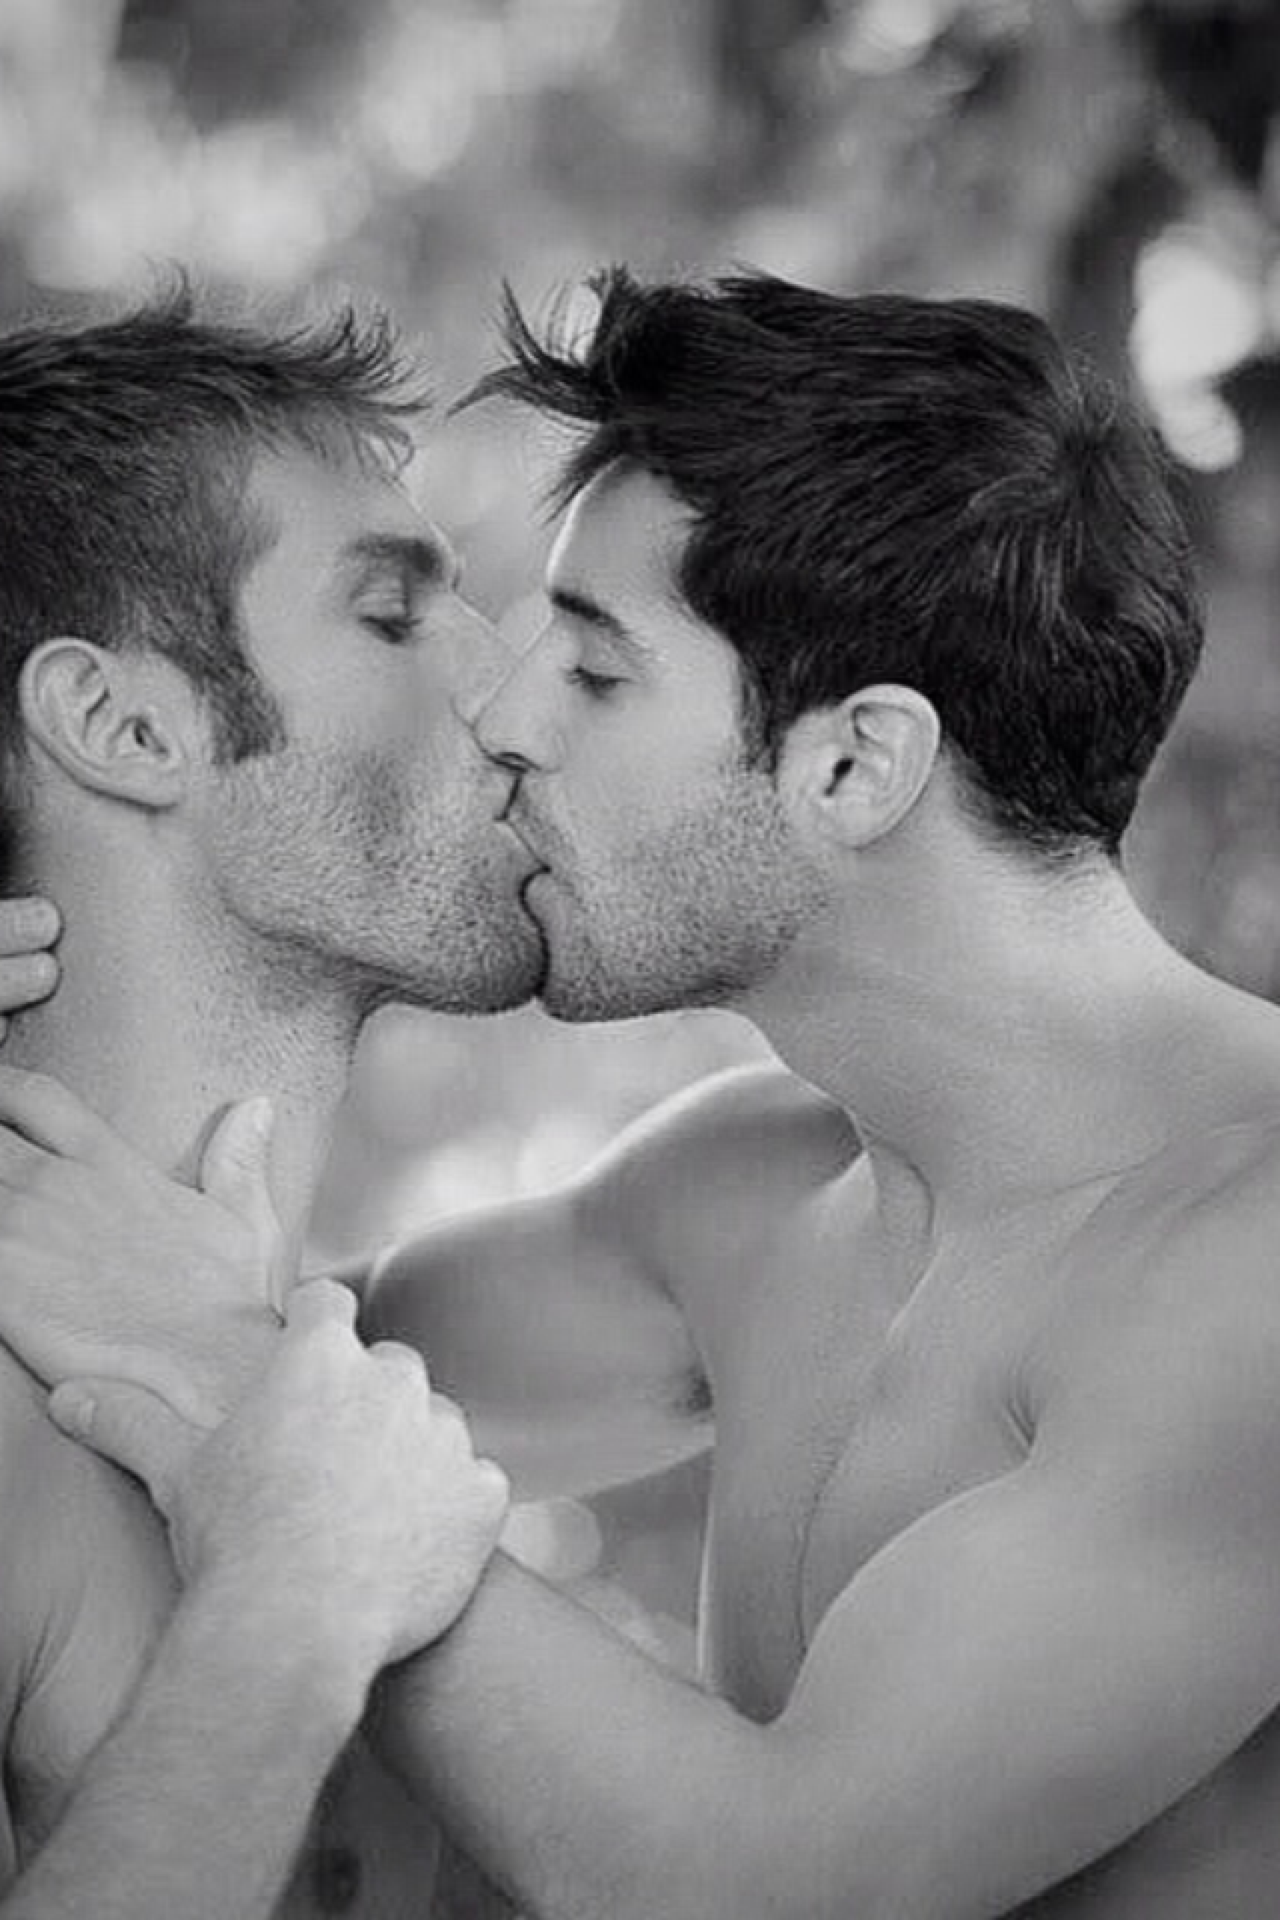 Pics of gay people kissing